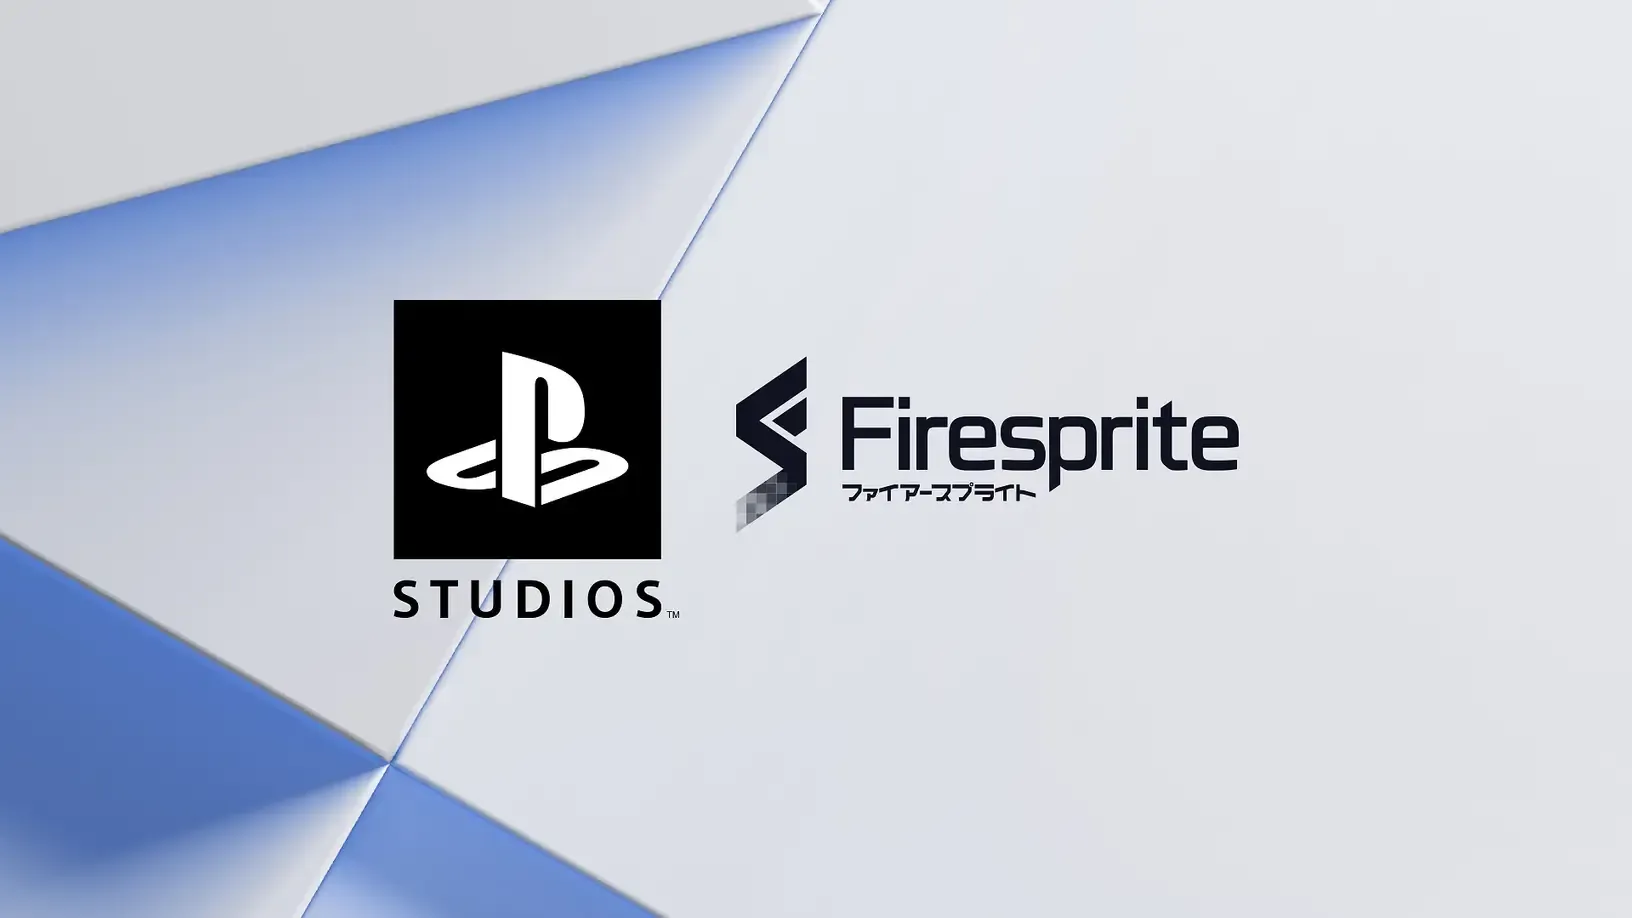 firesprite ps studios logos feature